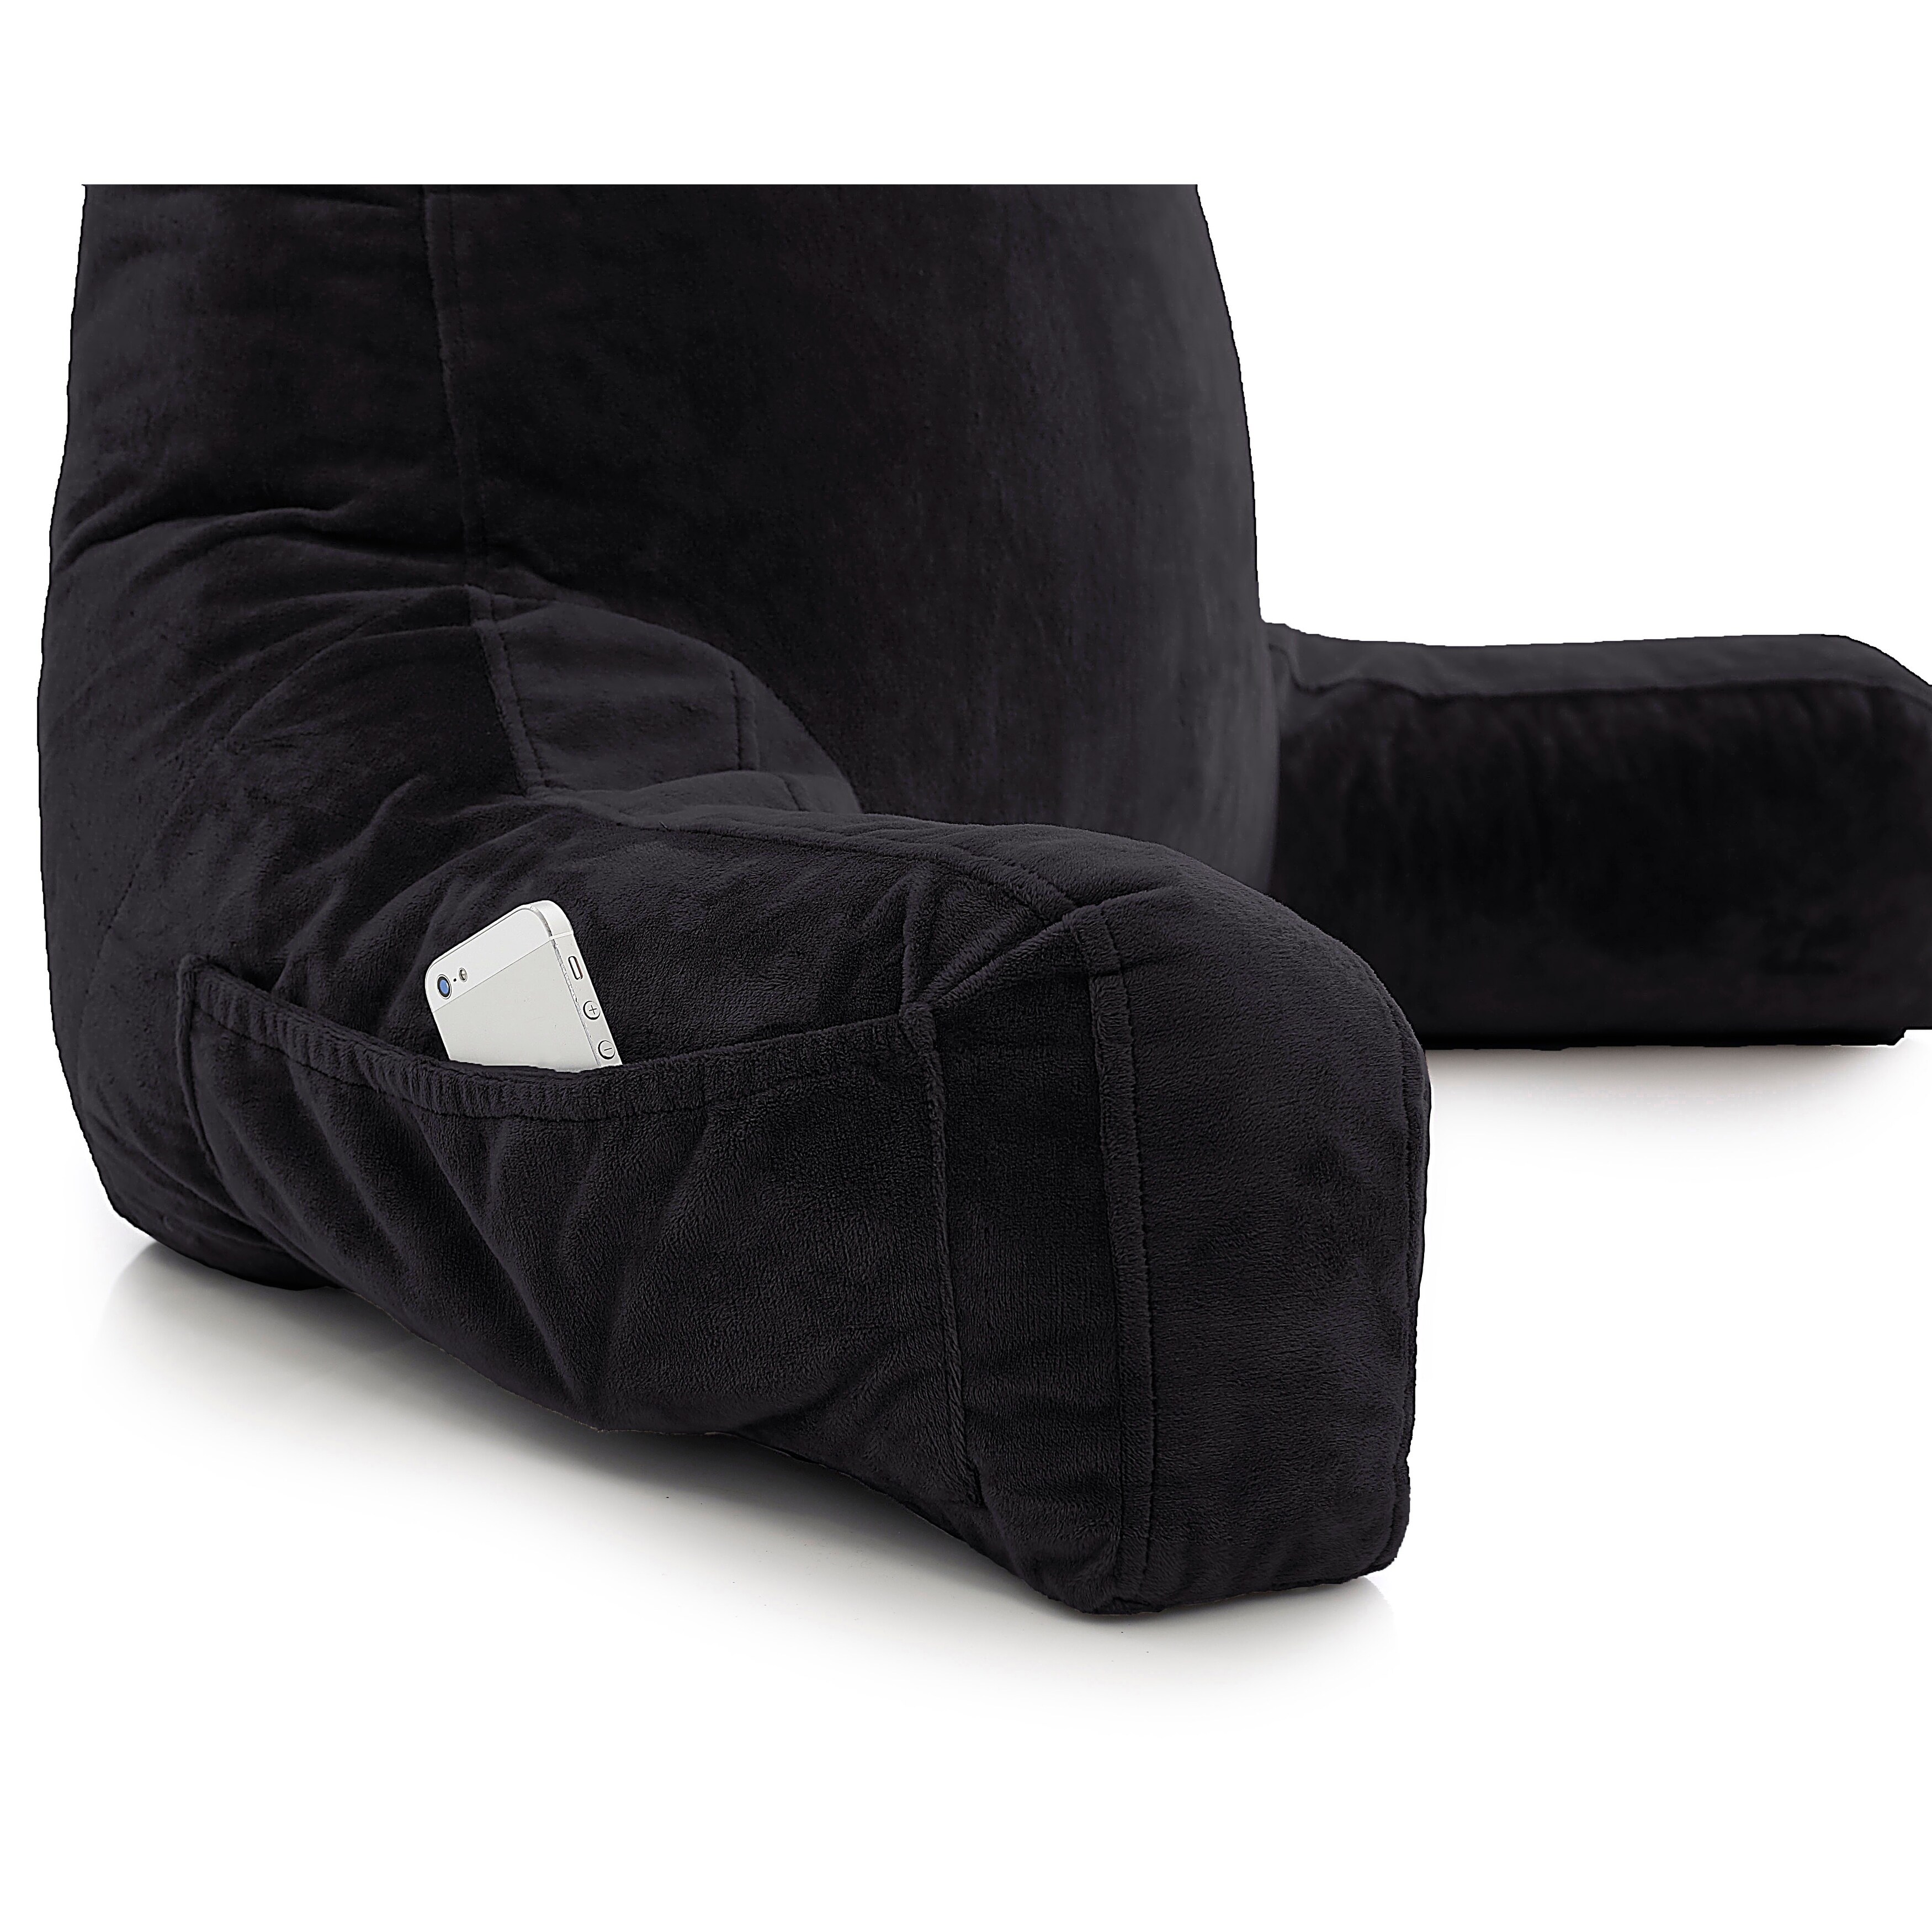 https://ak1.ostkcdn.com/images/products/30264505/Husband-Pillow-Bedrest-Reading-Support-Bed-Backrest-w-Arms-Shredded-Foam-Reading-Pillow-Bed-Rest-Pillow-e9fa70b9-3eb3-4dfa-8c9f-e32db729422e.jpg